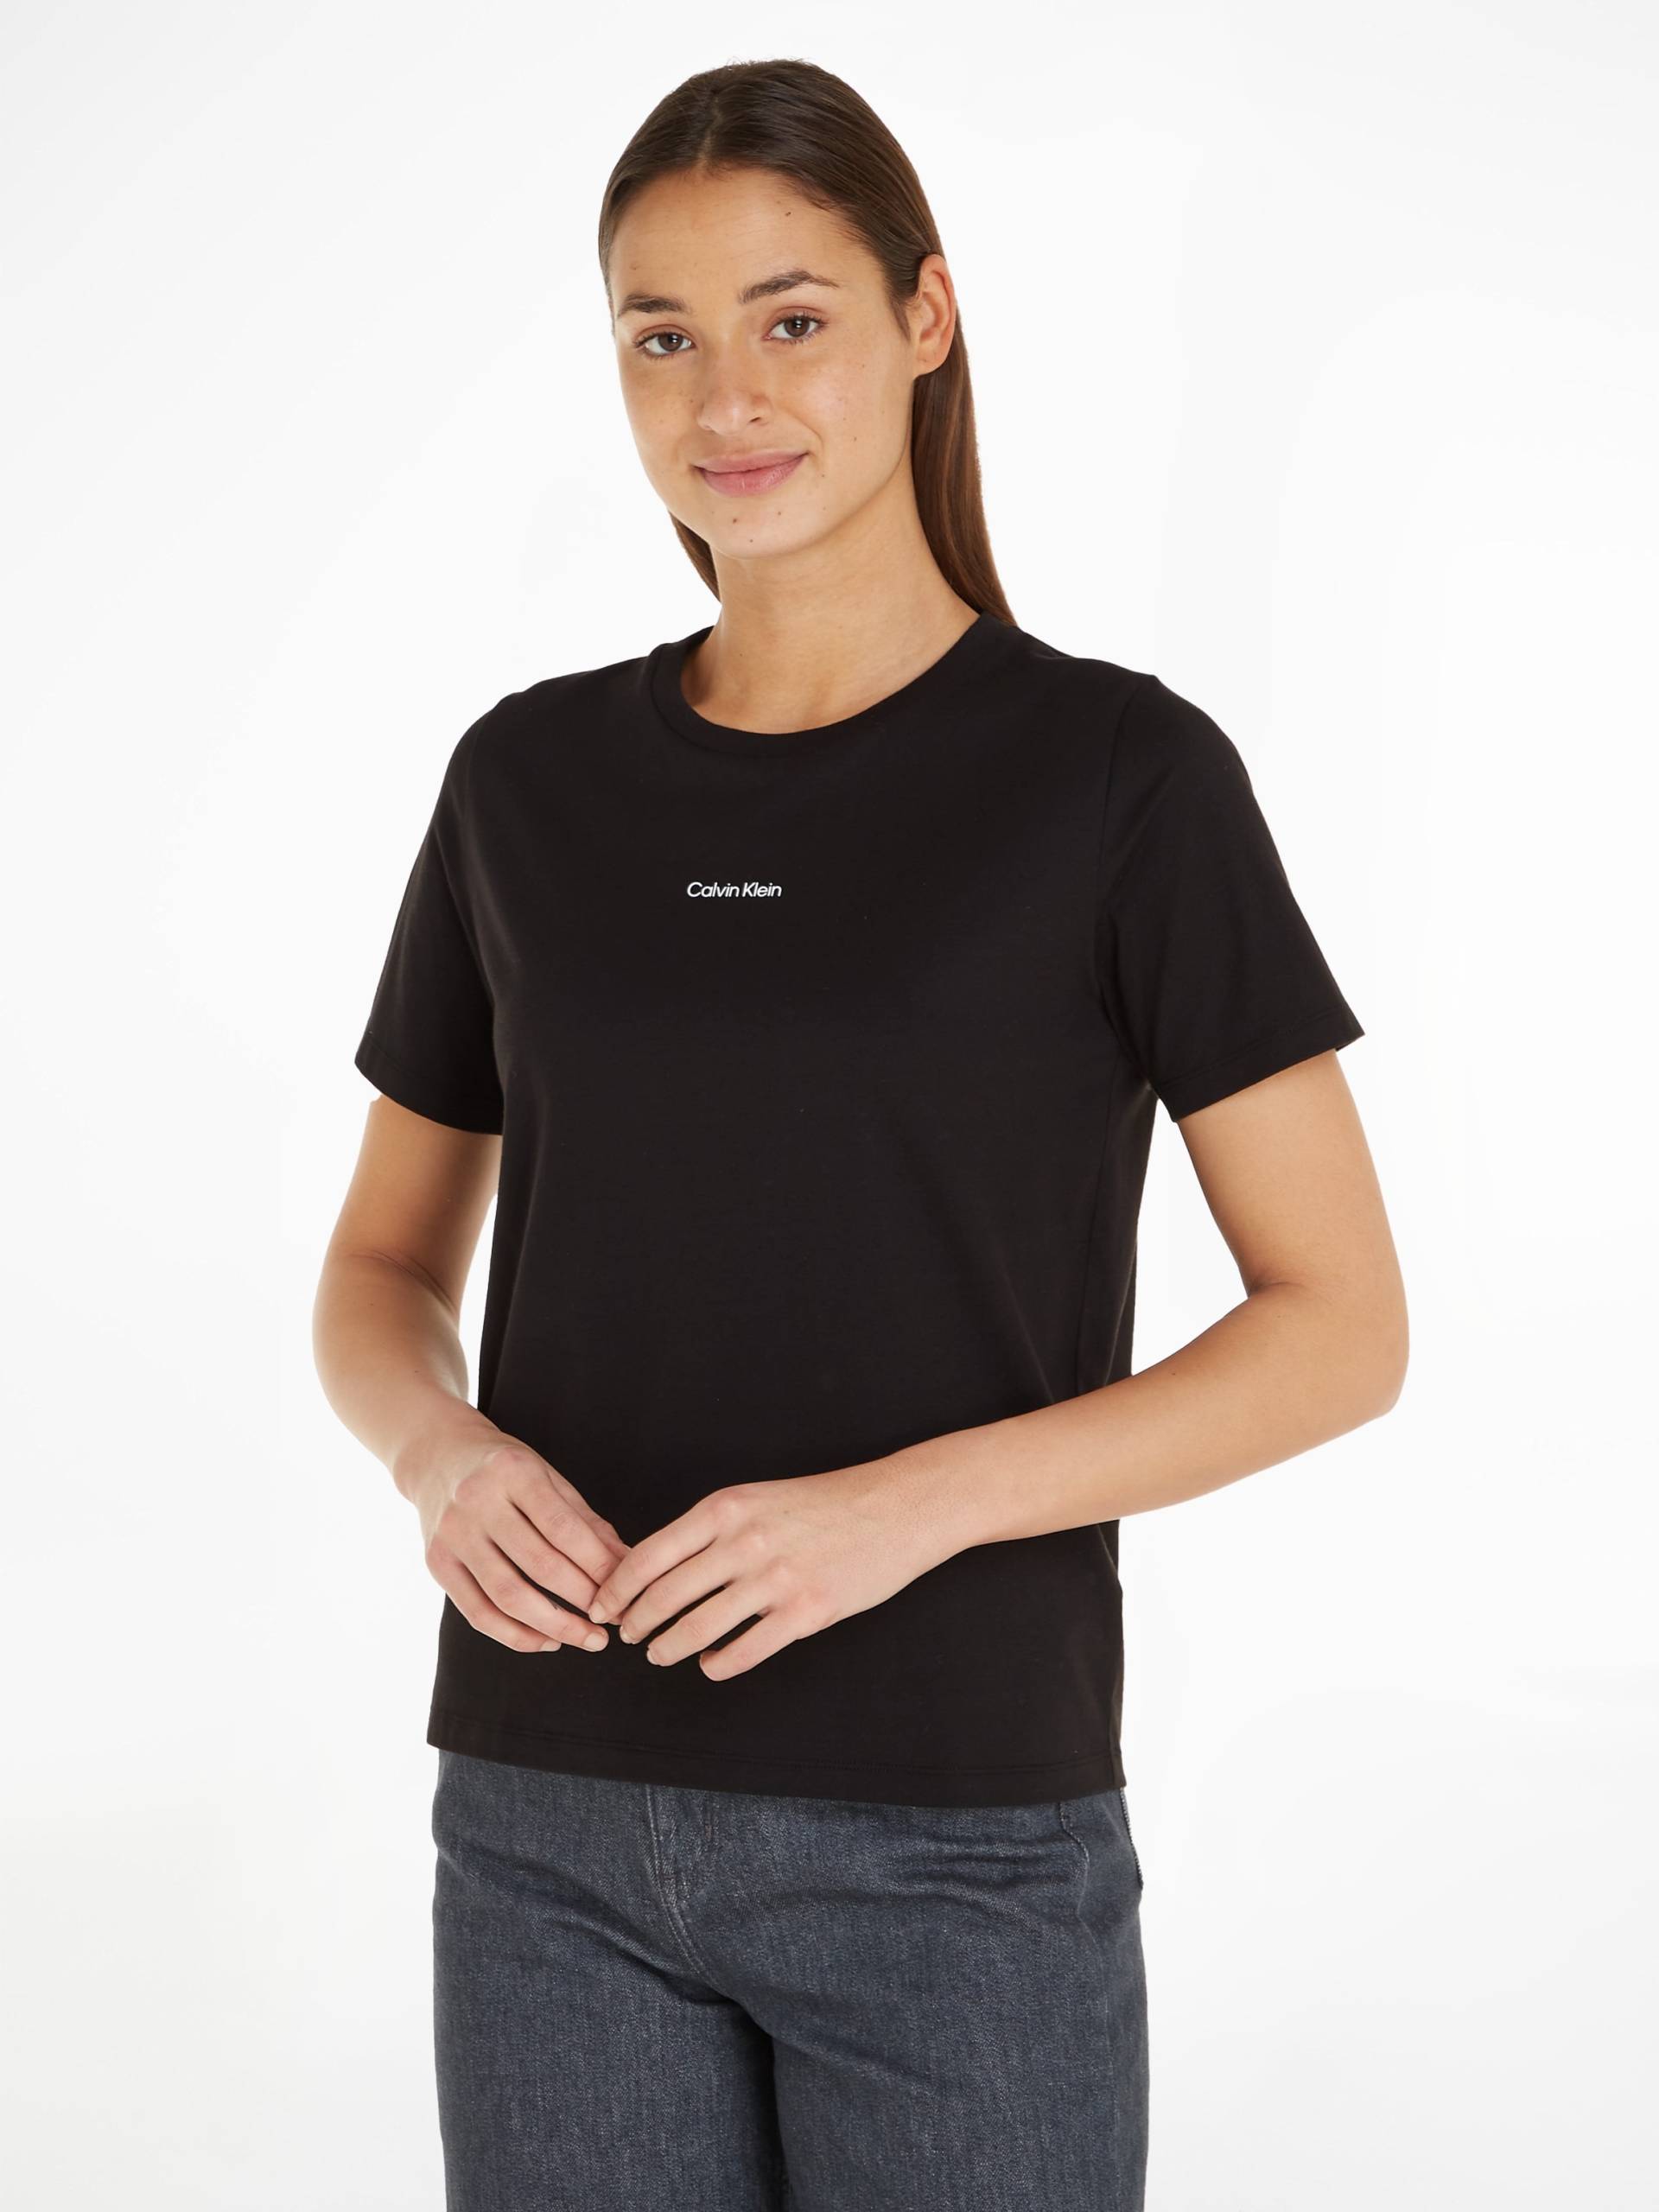 Calvin Klein T-Shirt »MICRO LOGO T-SHIRT« von Calvin Klein